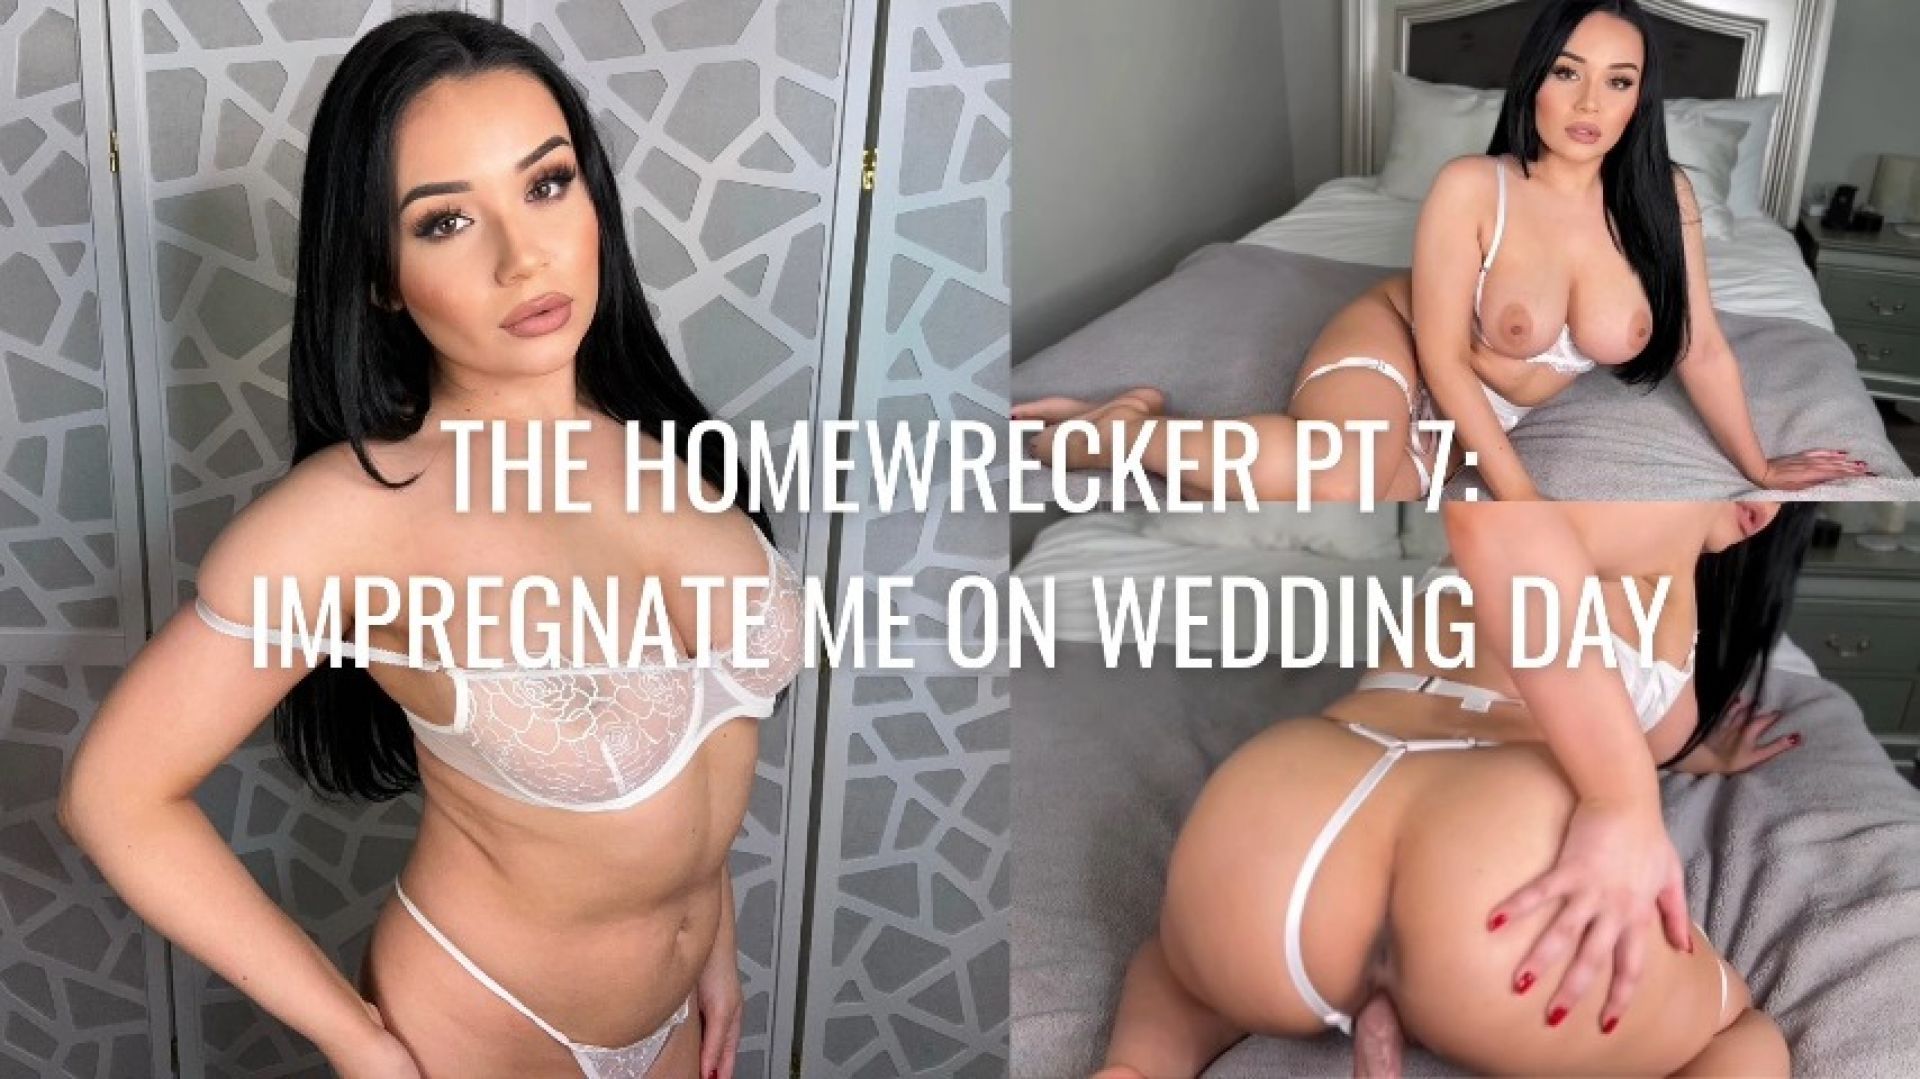 THE HOMEWRECKER PT 7: IMPREGNATE ME ON WEDDING DAY